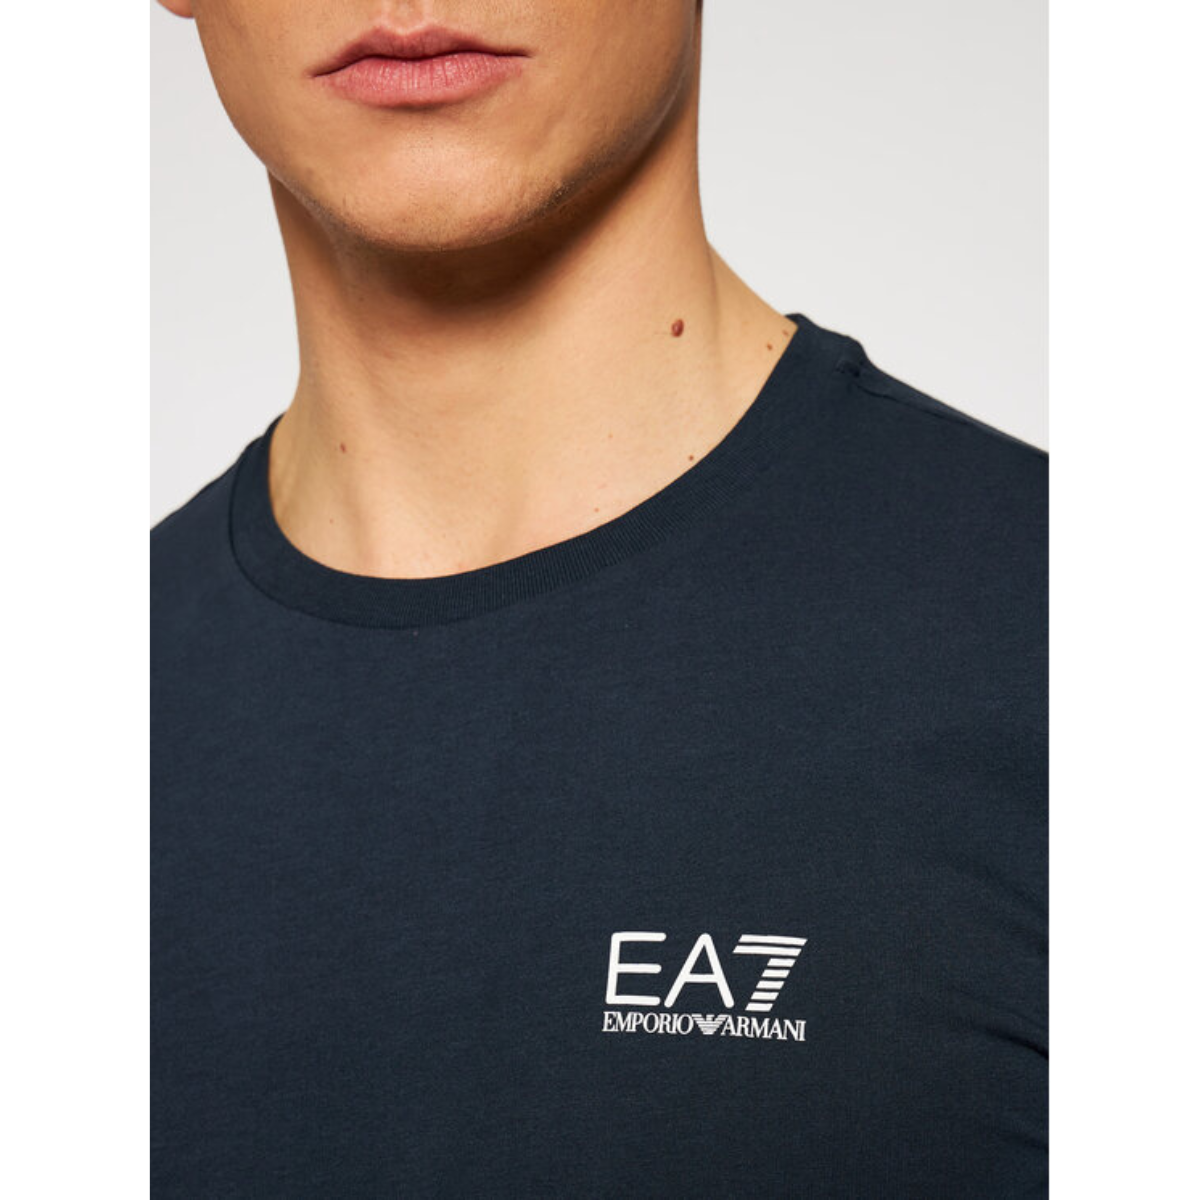 EA7 Emporio Armani - T-Shirt - Dark Blue